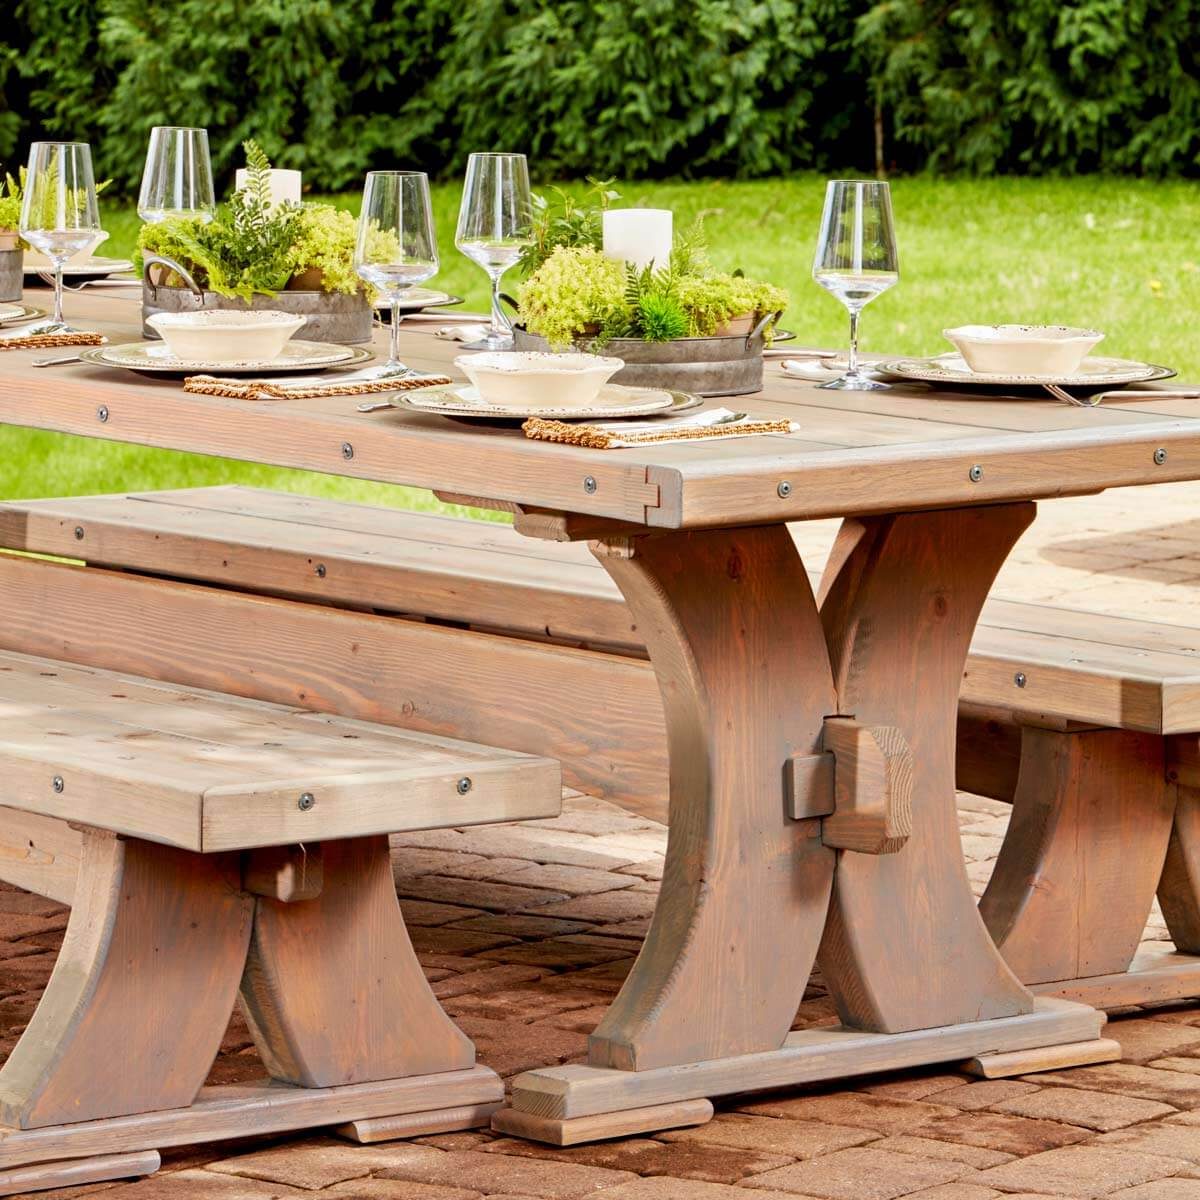 Built-to-Last Viking Long Table — The Family Handyman